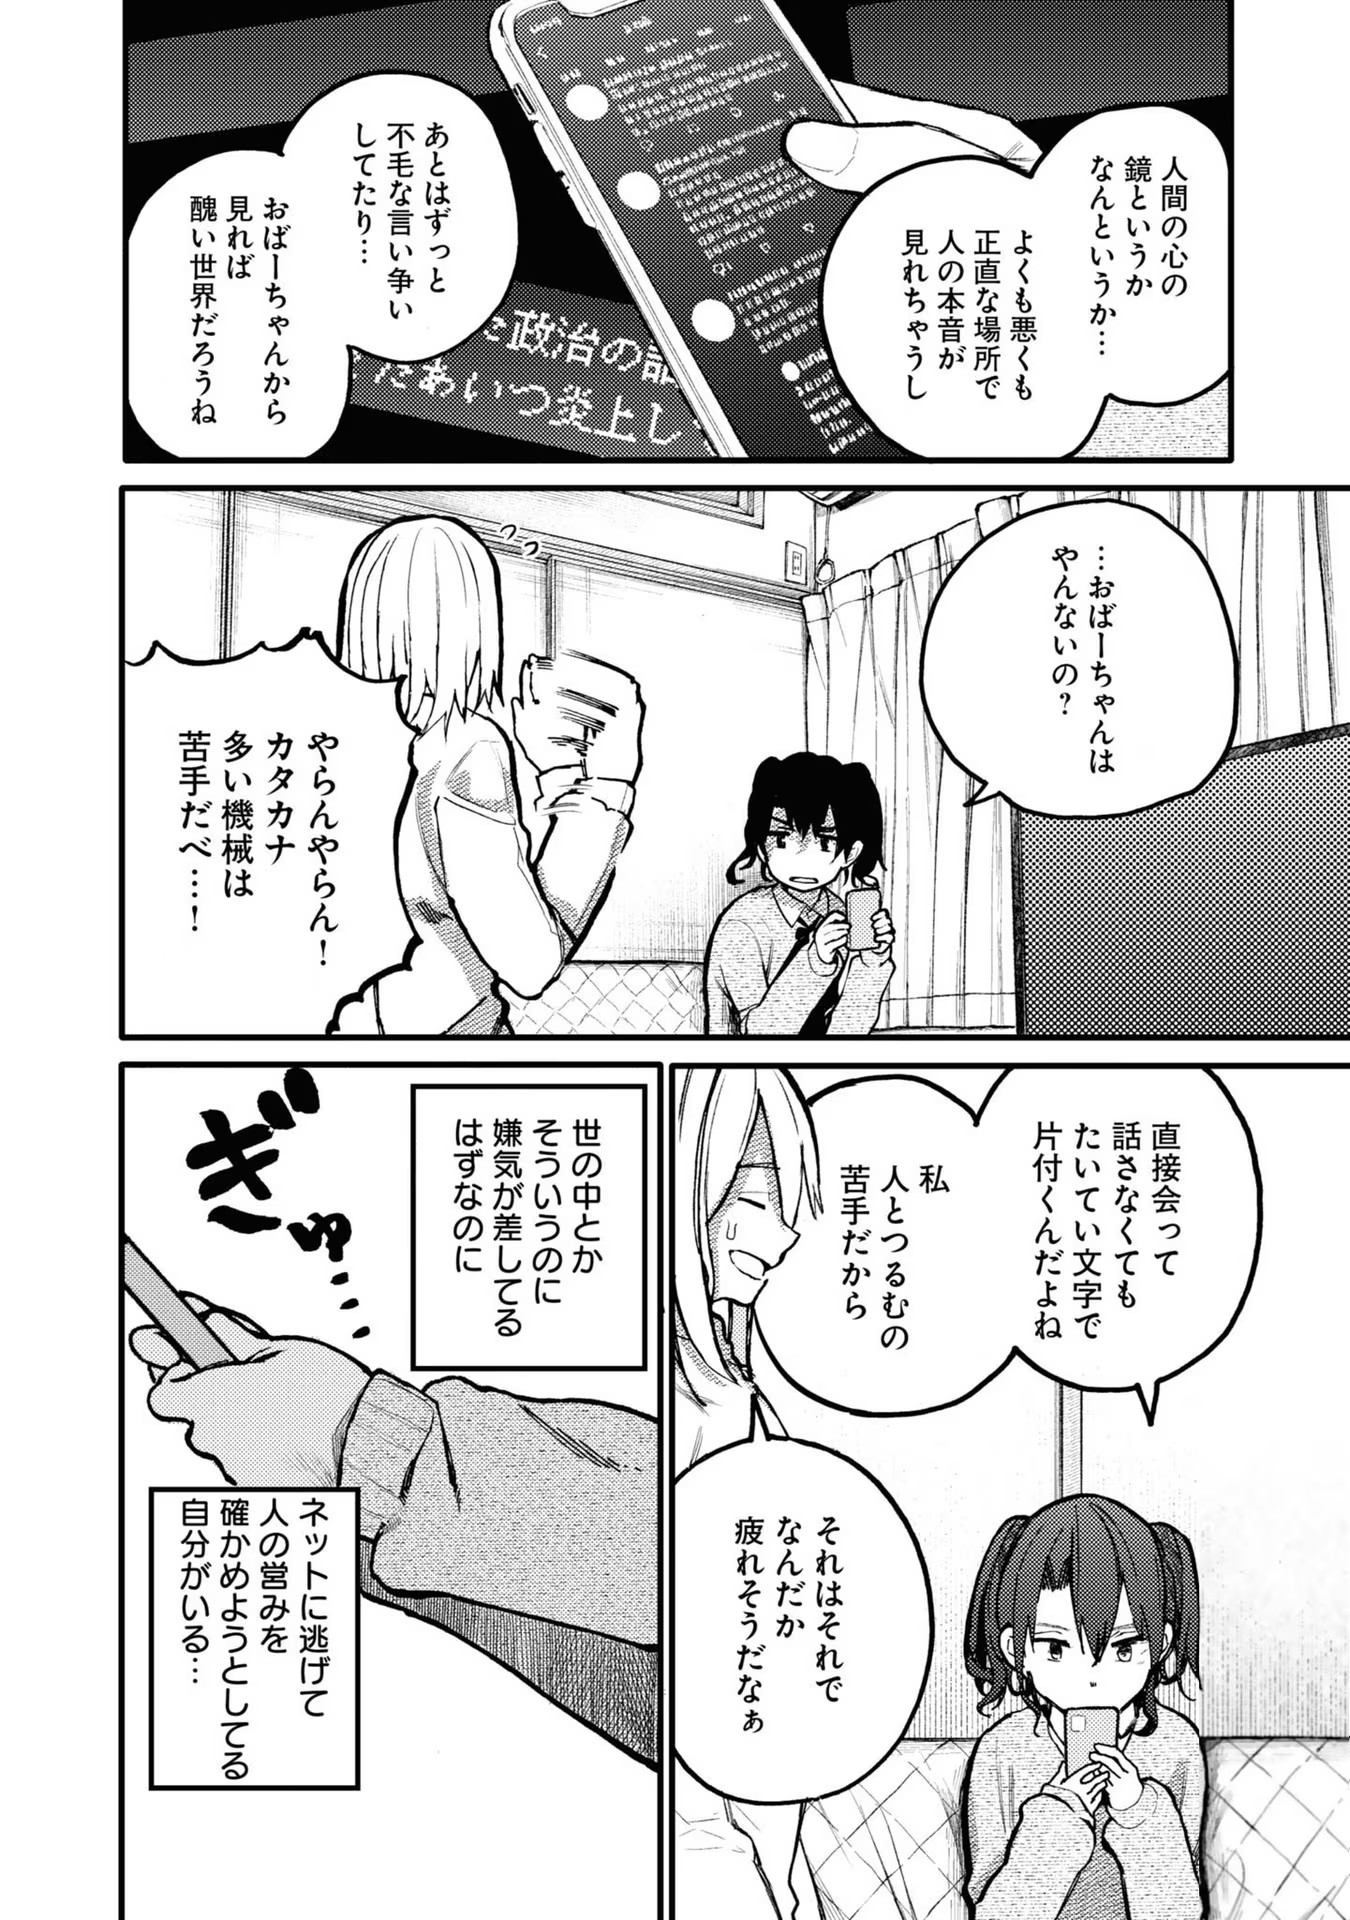 Ojii-san to Obaa-san ga Wakigaetta Hanashi - Chapter 41 - Page 2